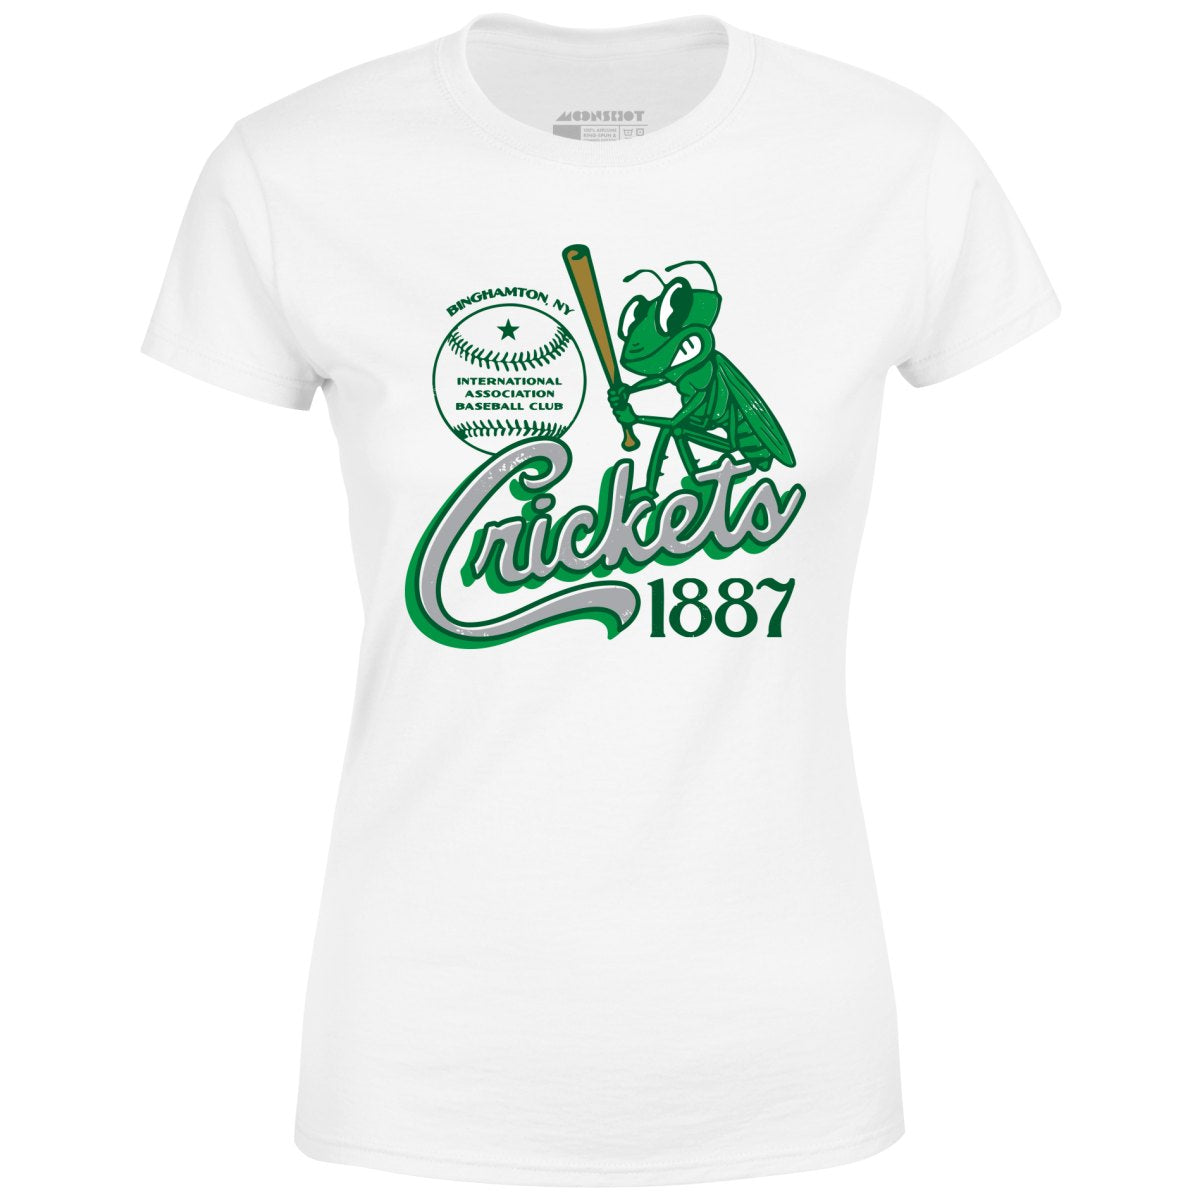 Binghamton Crickets - New York - Vintage Defunct Baseball Teams - Women's T-Shirt